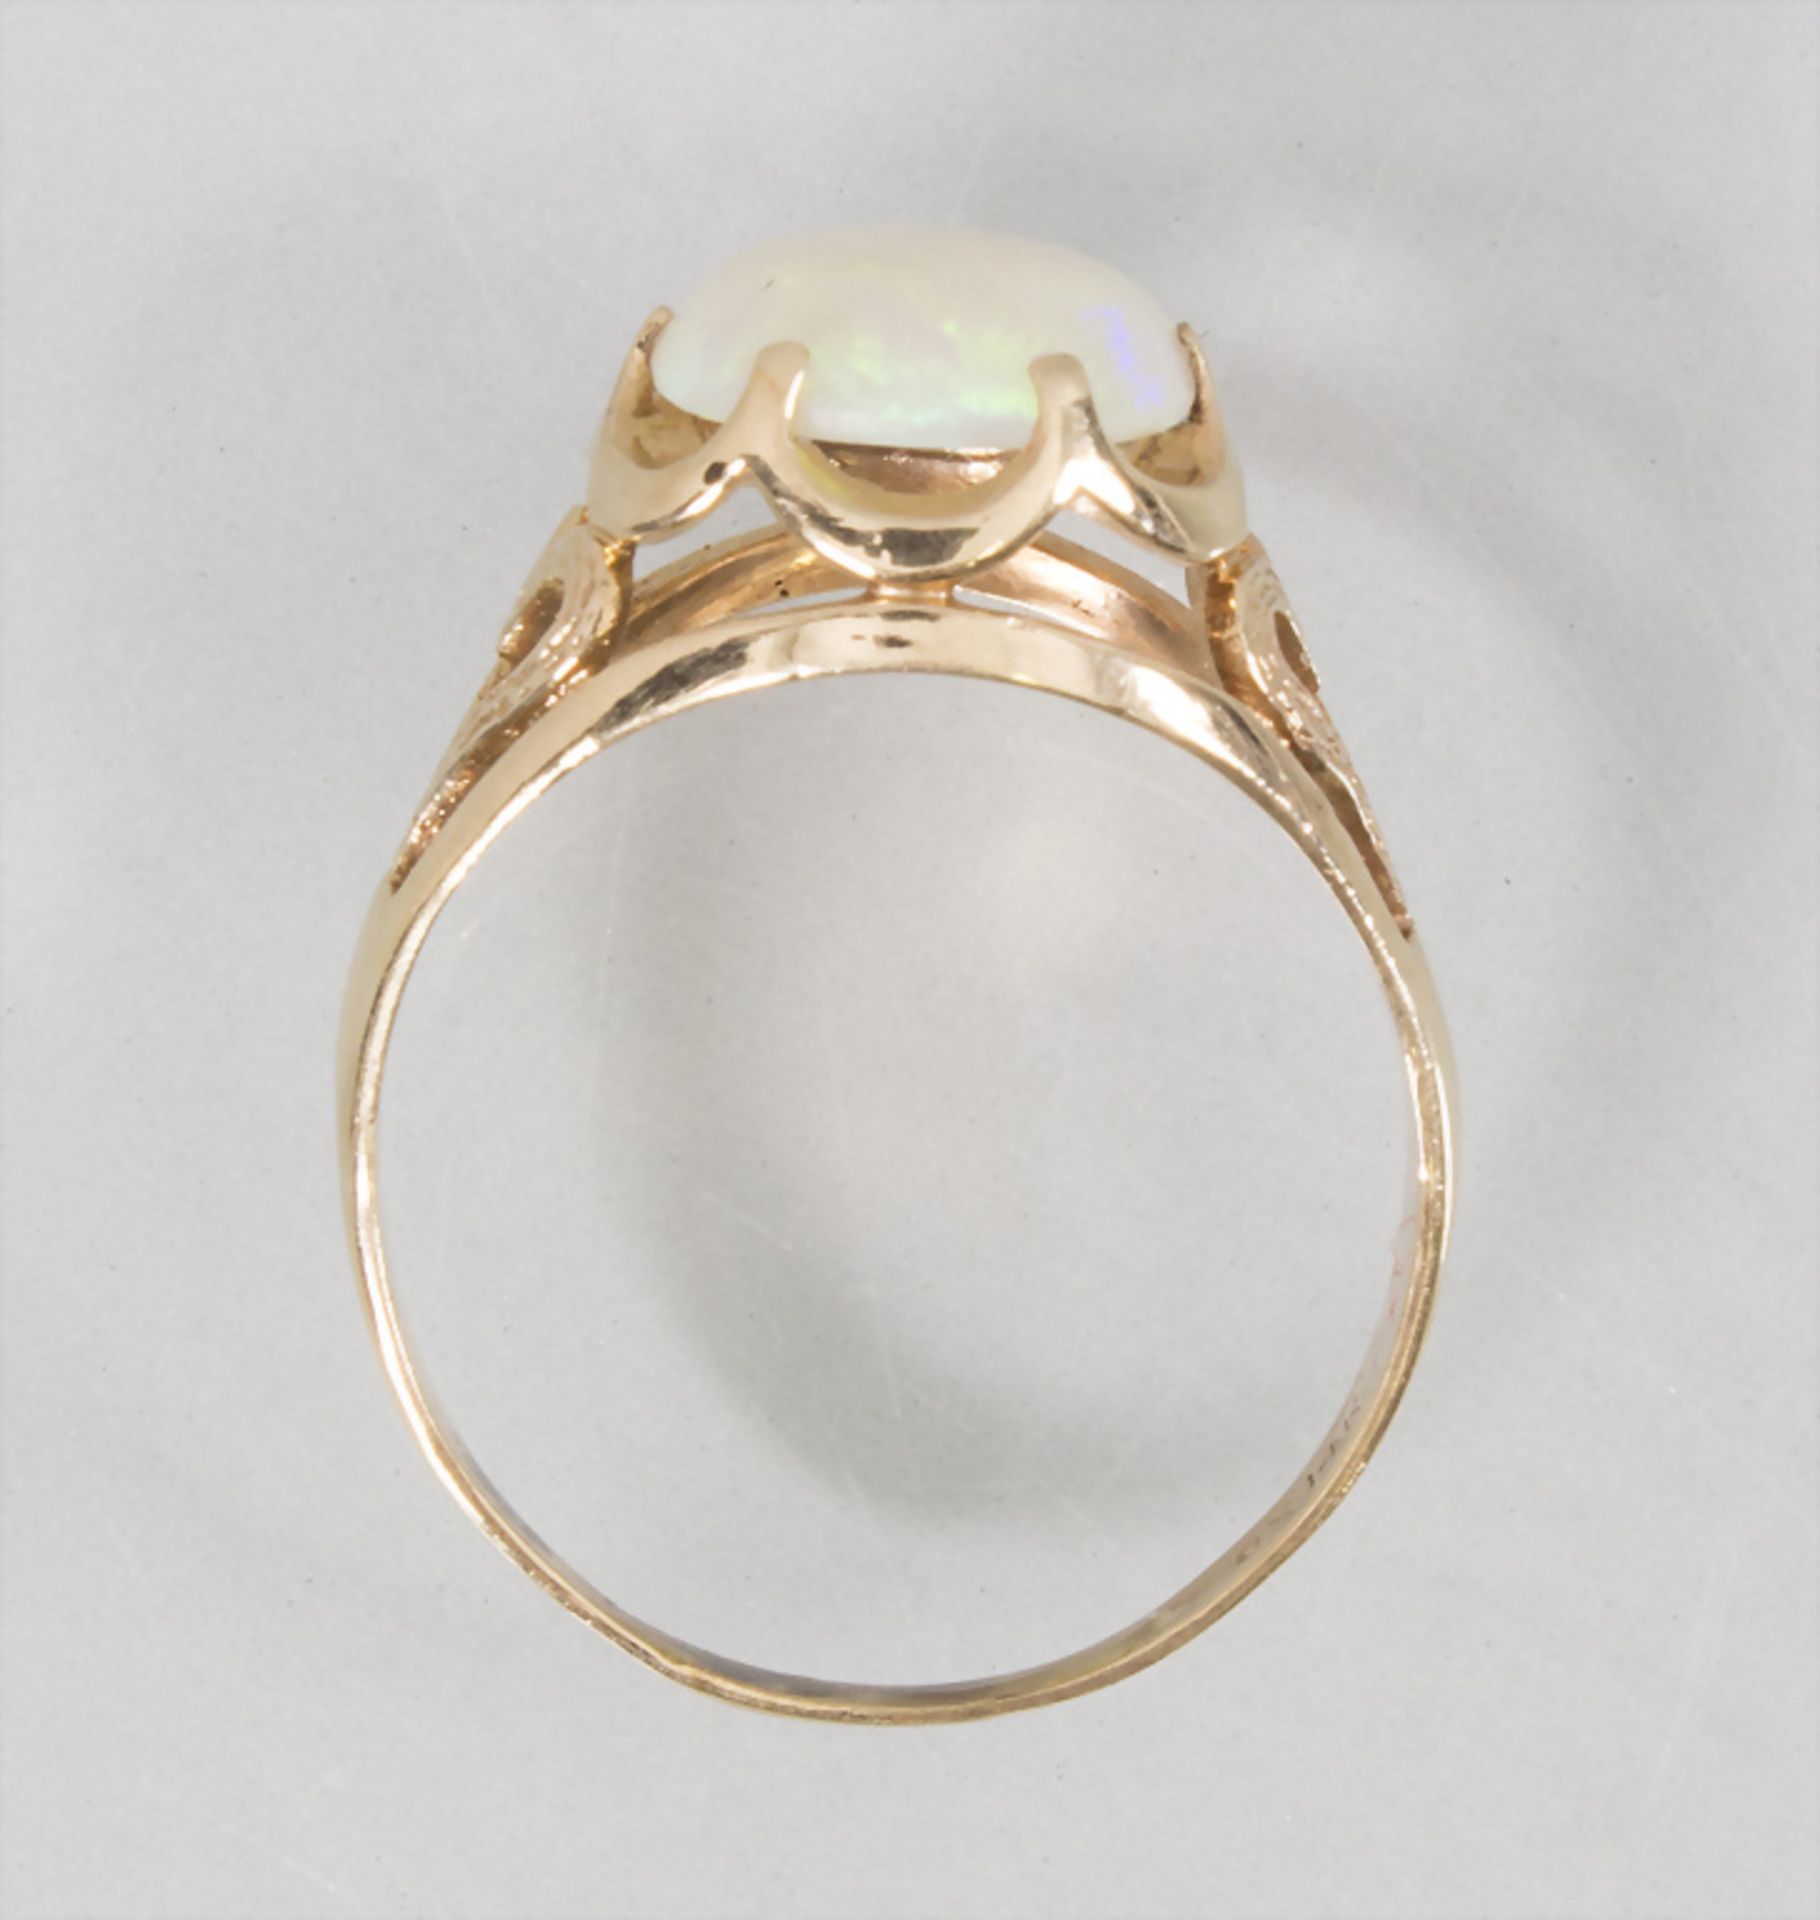 Damenring mit Opal / A ladies 14k gold ring with an opal - Bild 2 aus 4